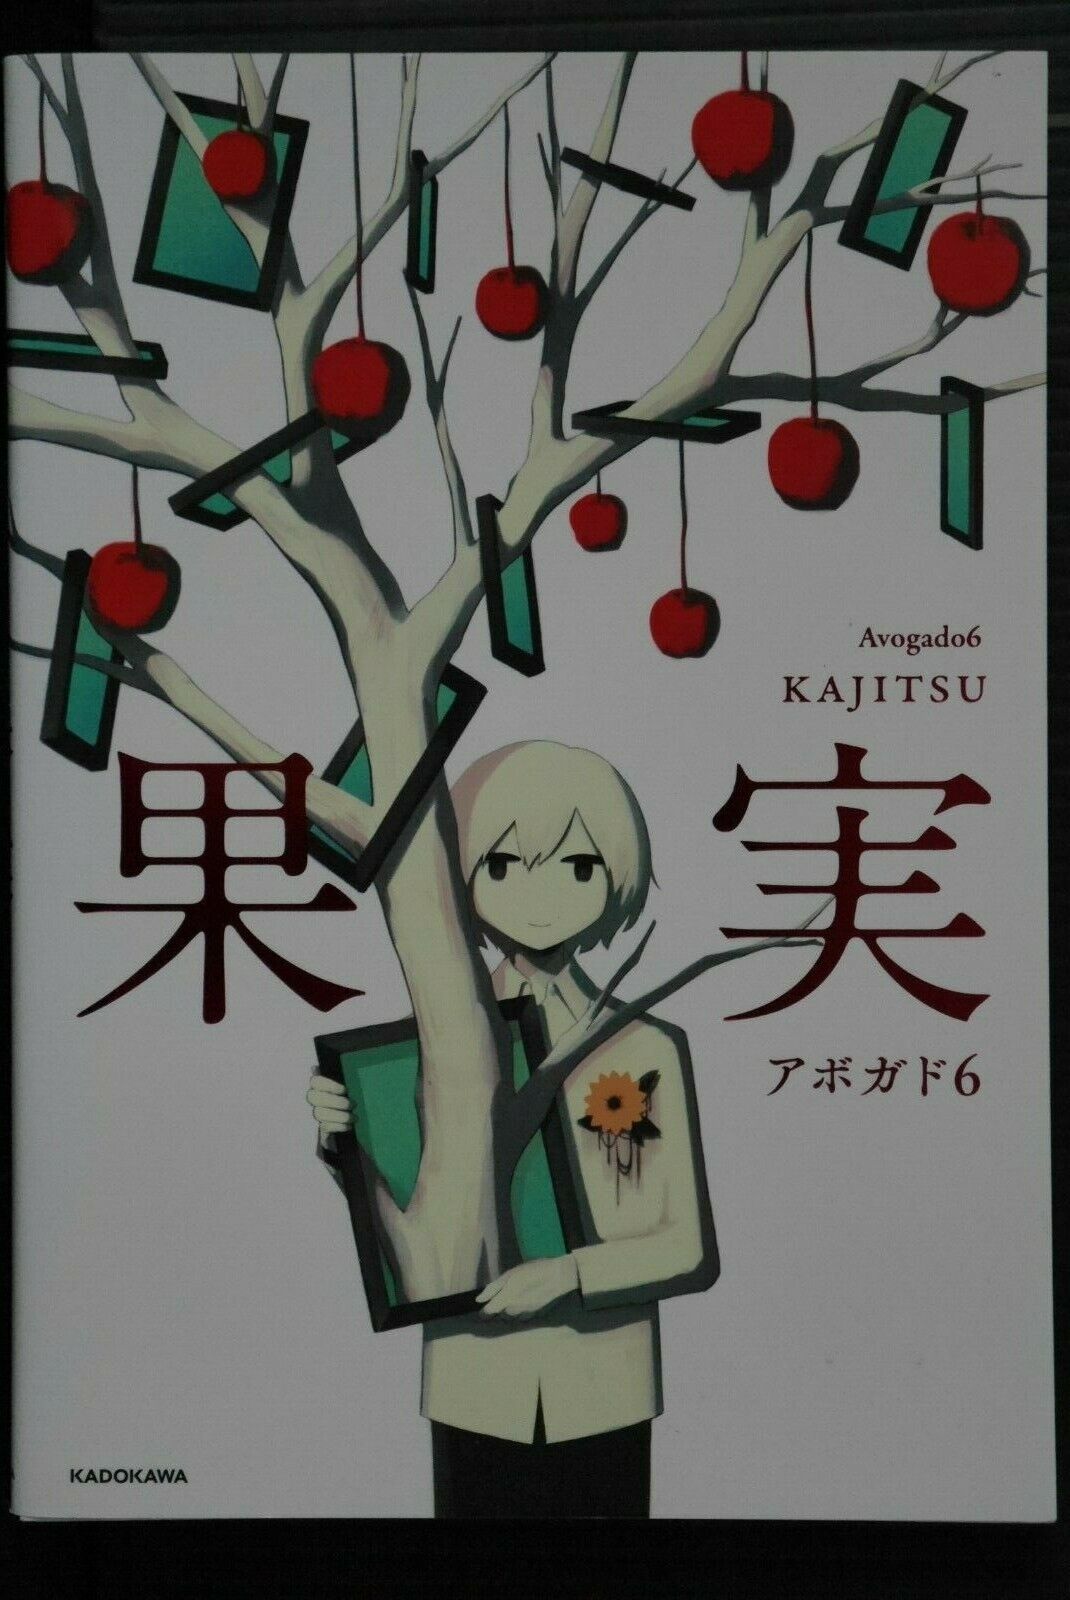 JAPAN Avogado6 Art Book: Kajitsu